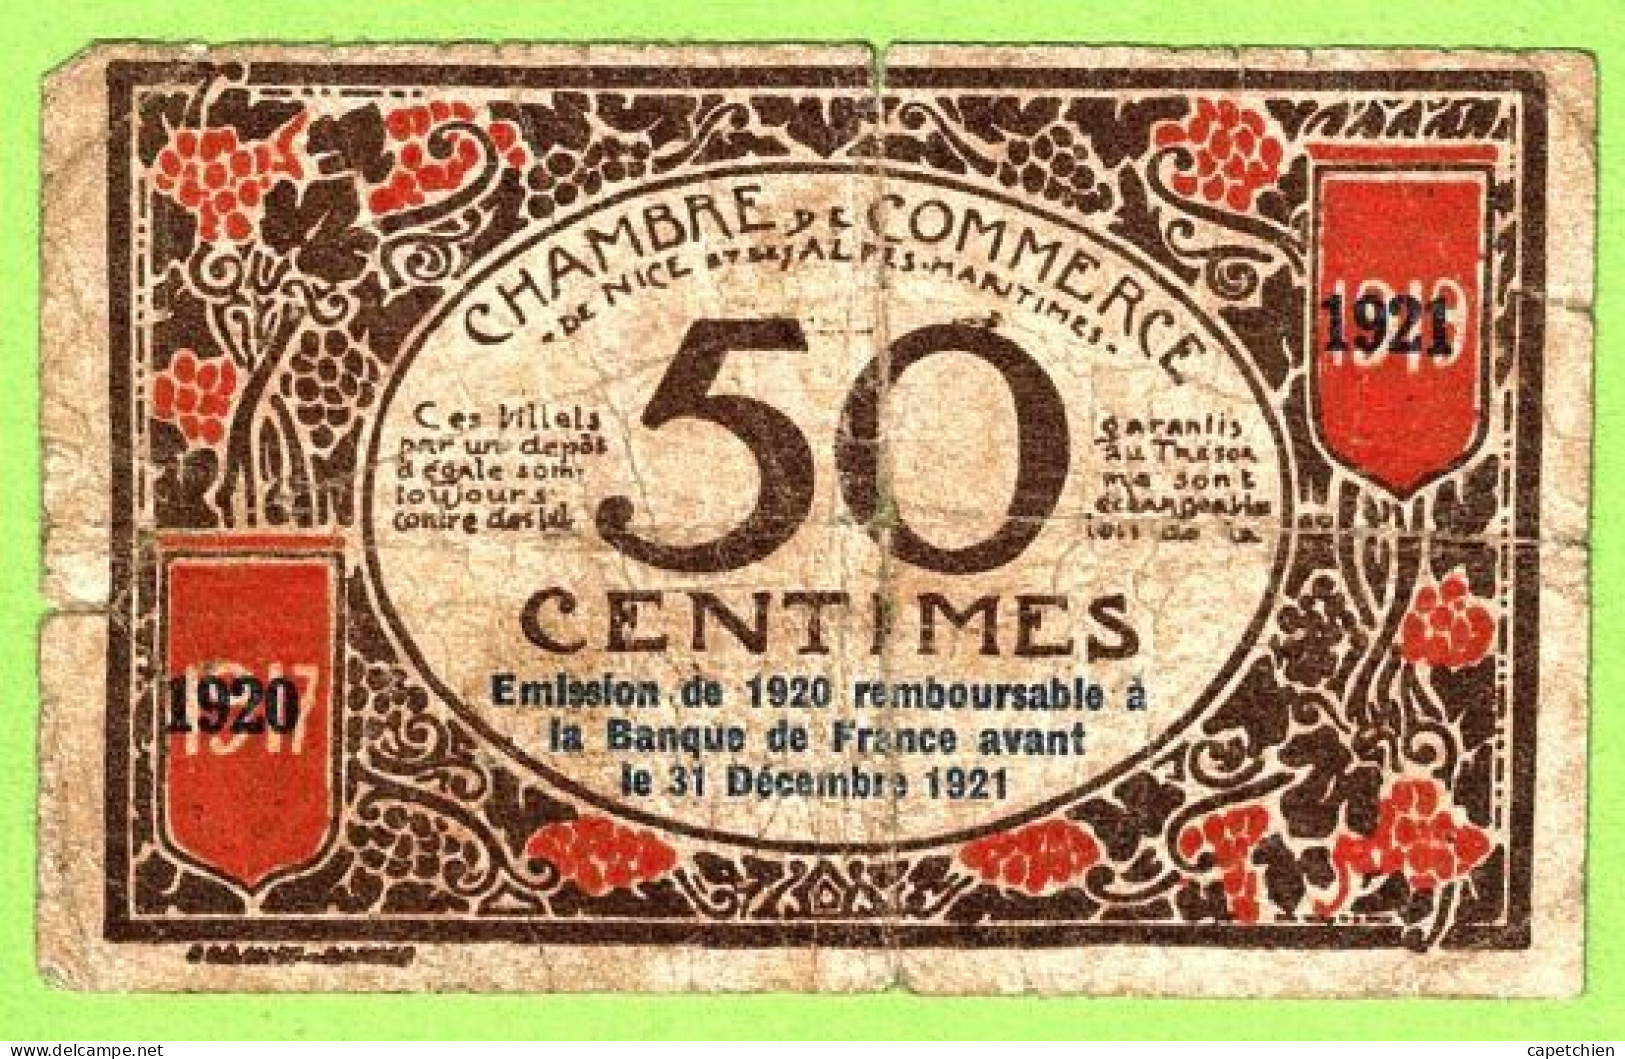 FRANCE / CHAMBRE De COMMERCE / NICE - ALPES MARITIMES / 50 CENTIMES / 1917 - 1921 SURCHARGE 1920 - 1921 / N° 00374 - Camera Di Commercio